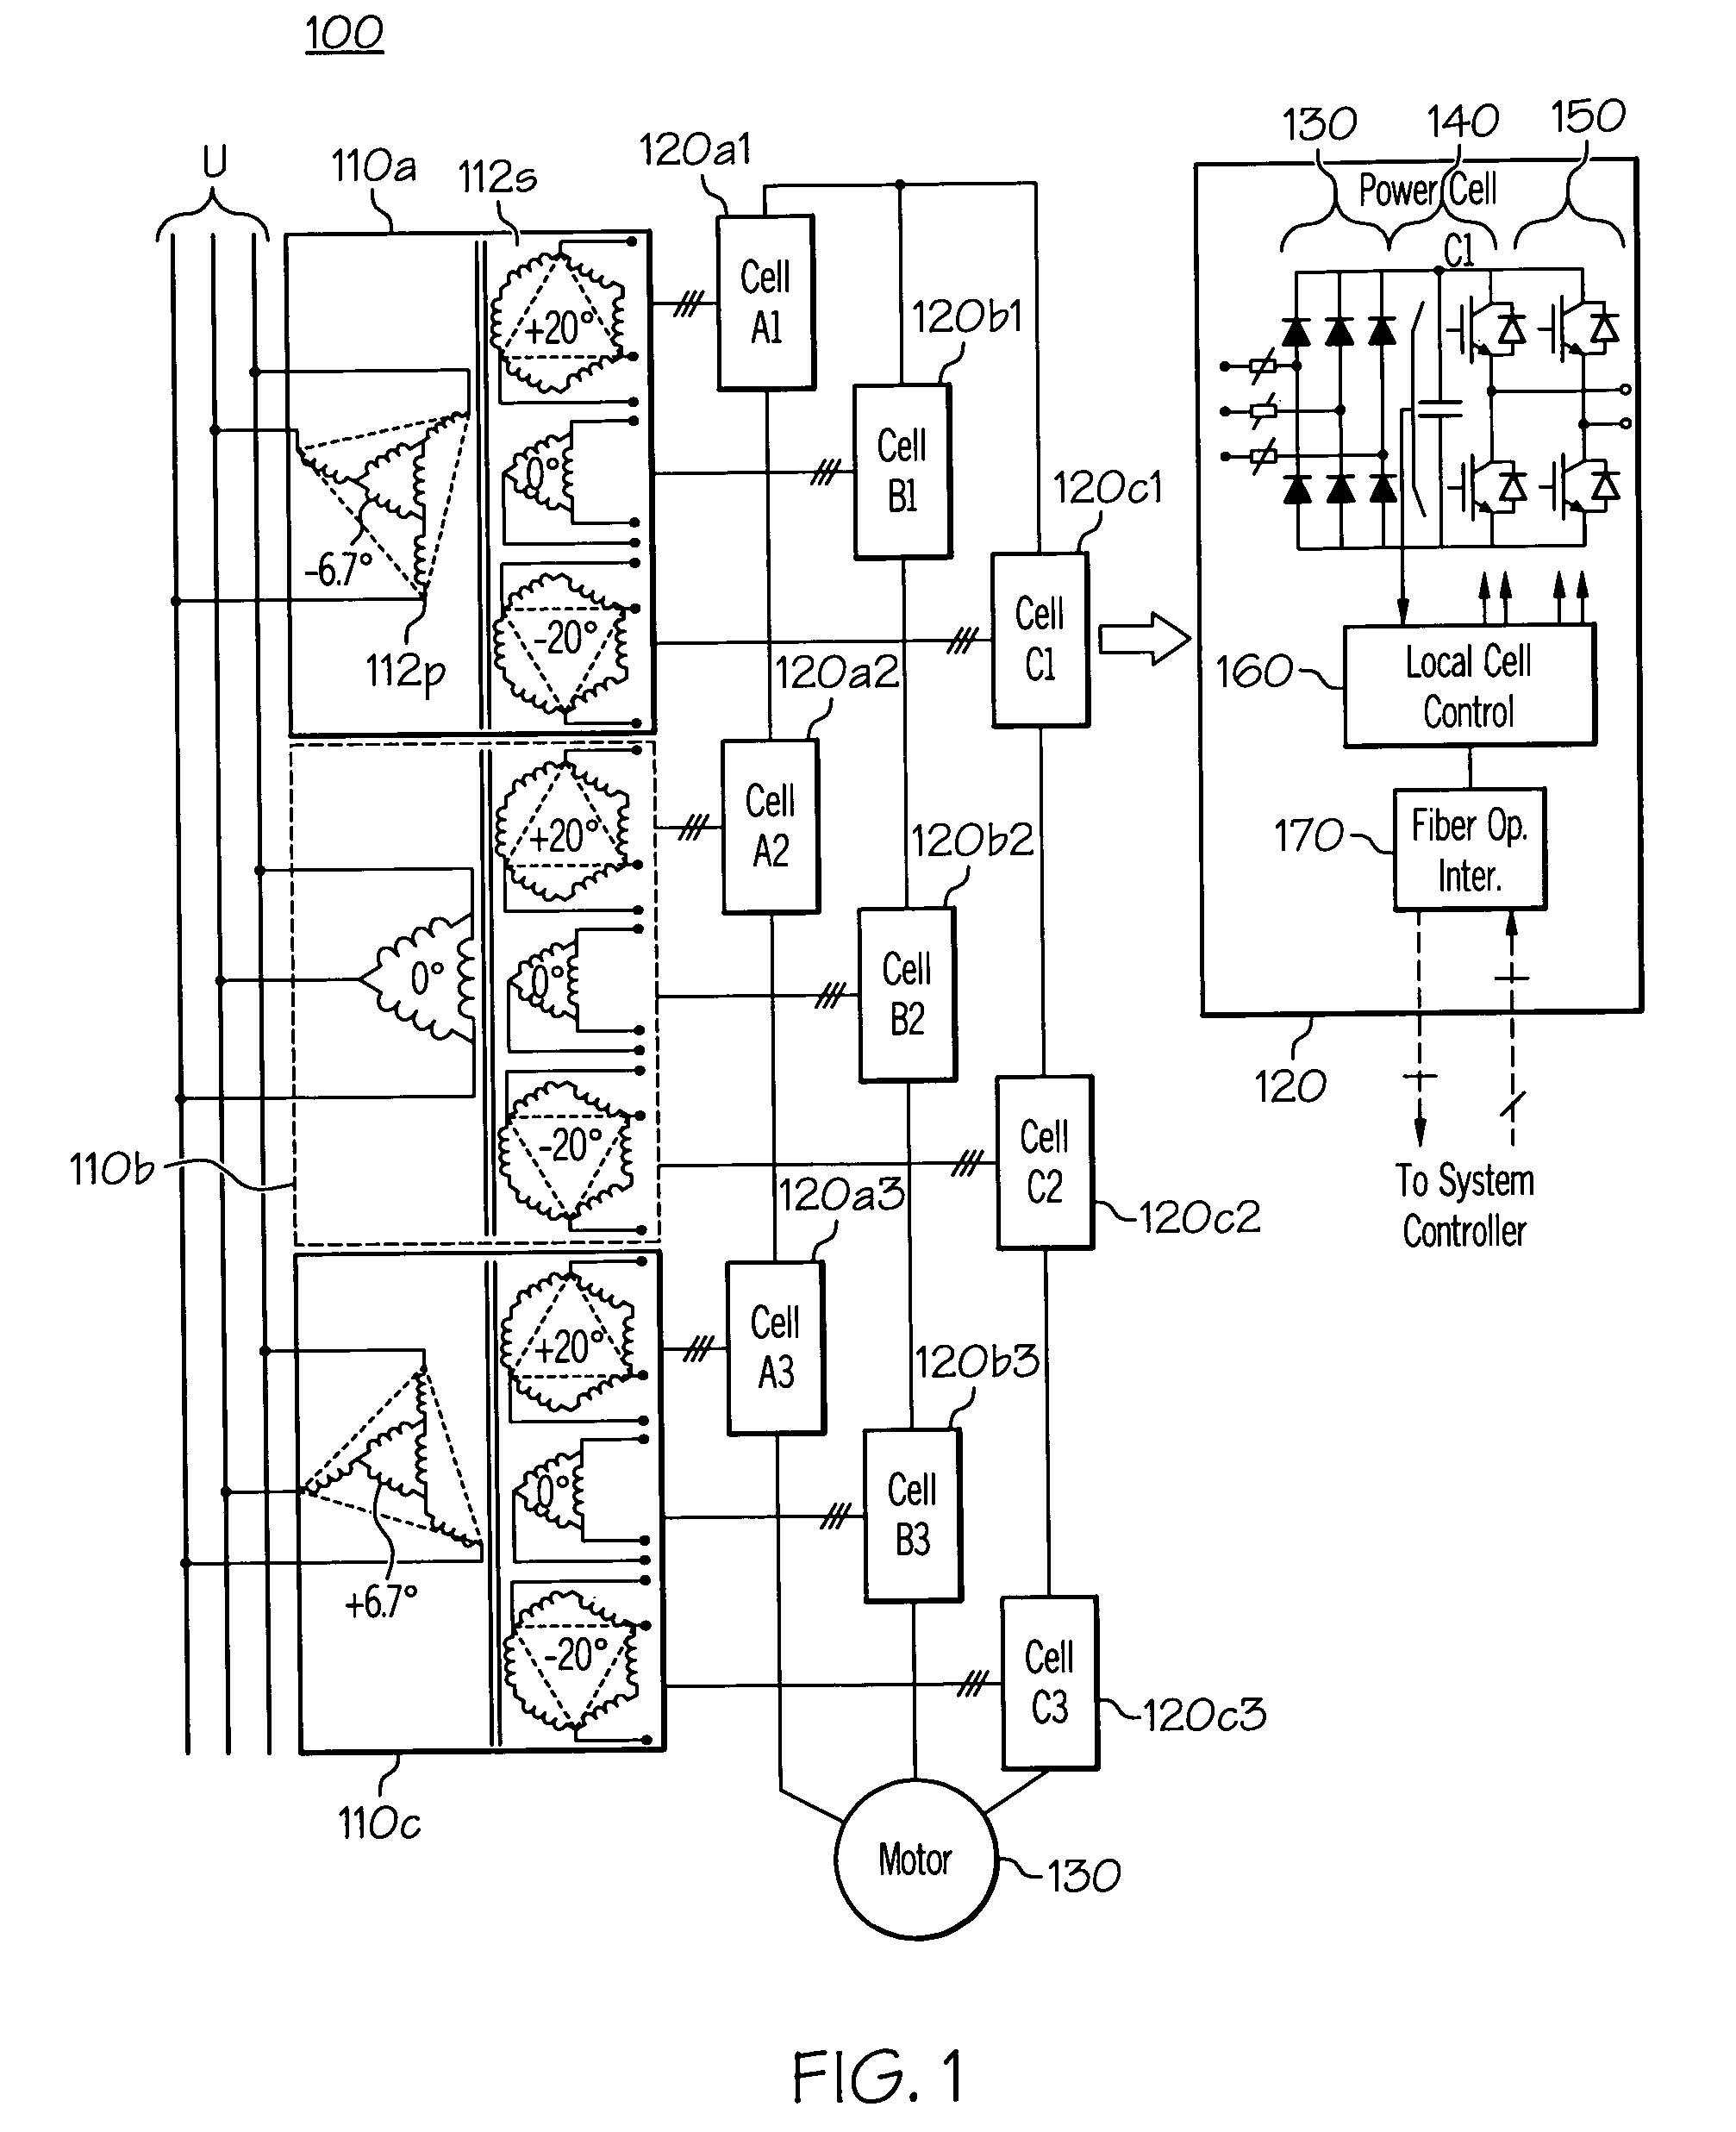 Modular multi-pulse transformer rectifier for use in symmetric multi-level power converter